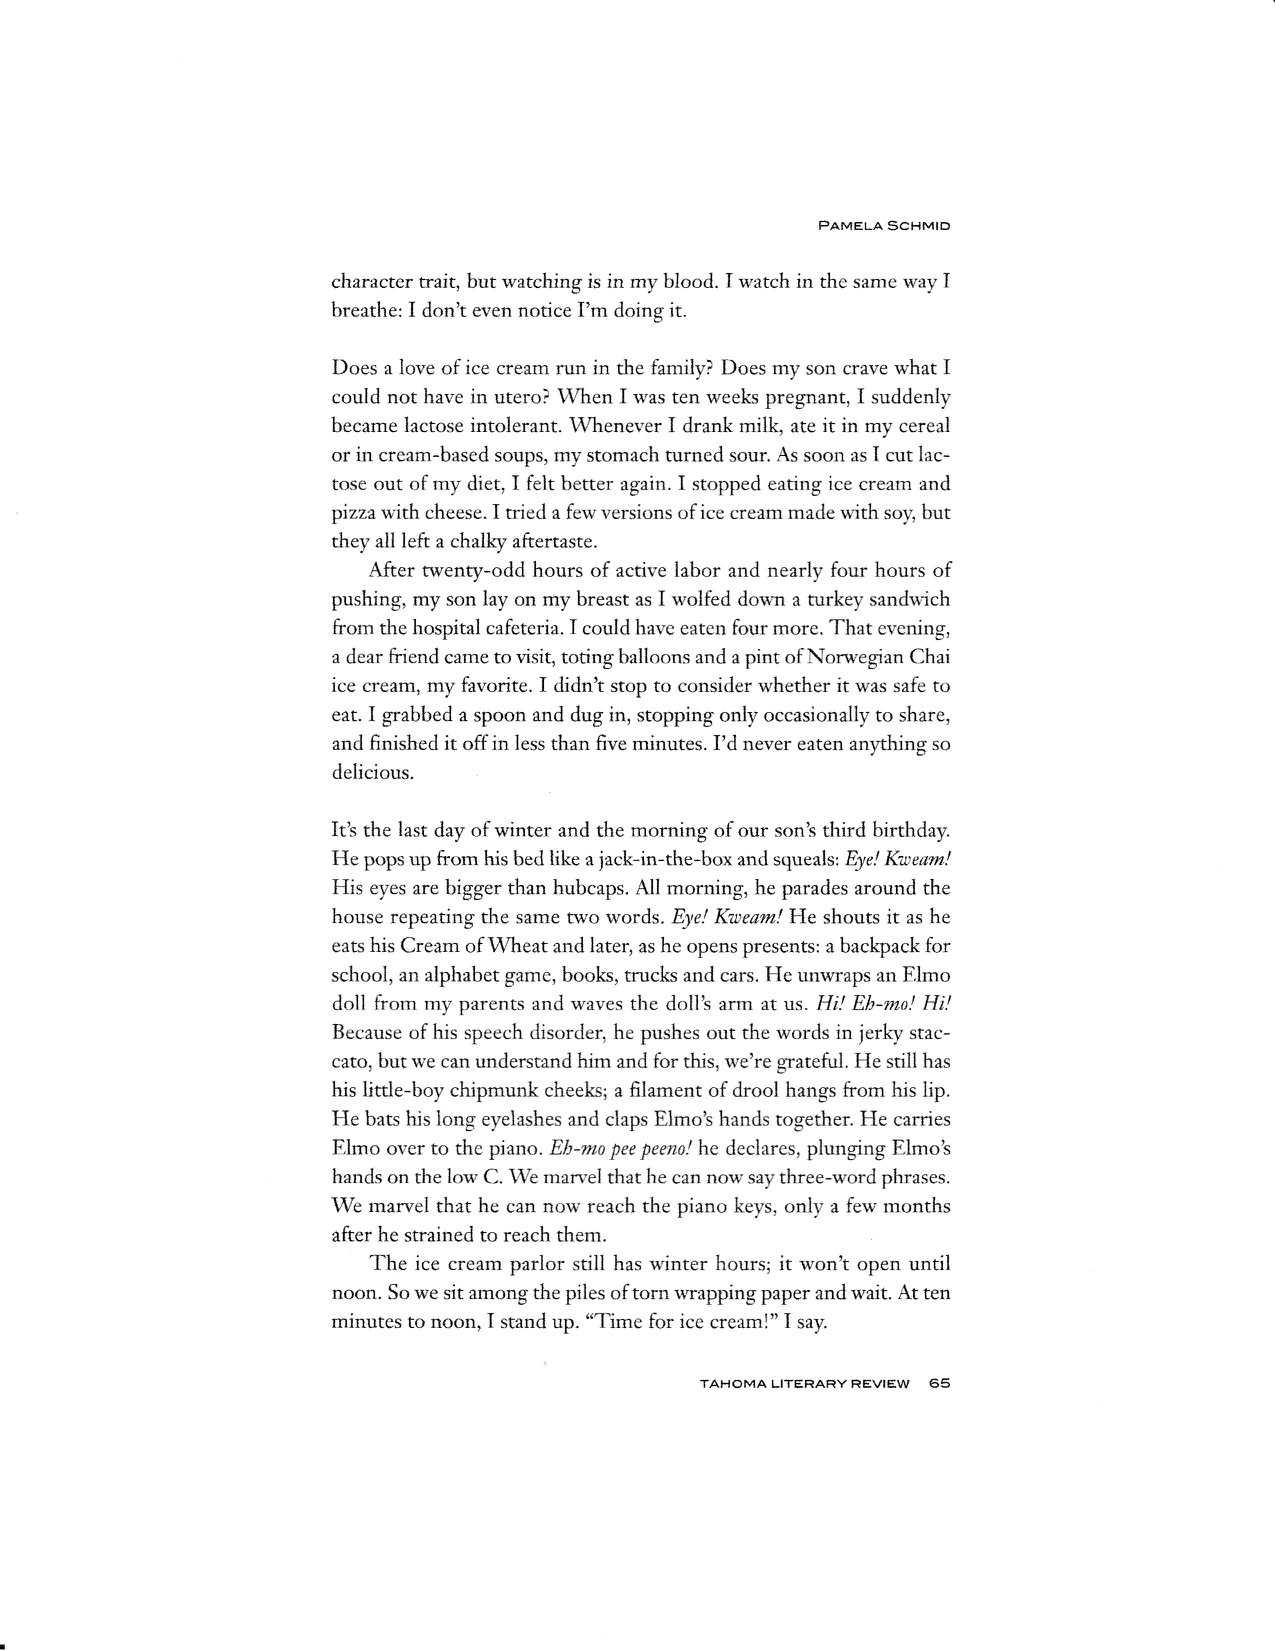 Tahoma_Literary_Review_The_Emperor 09.jpg